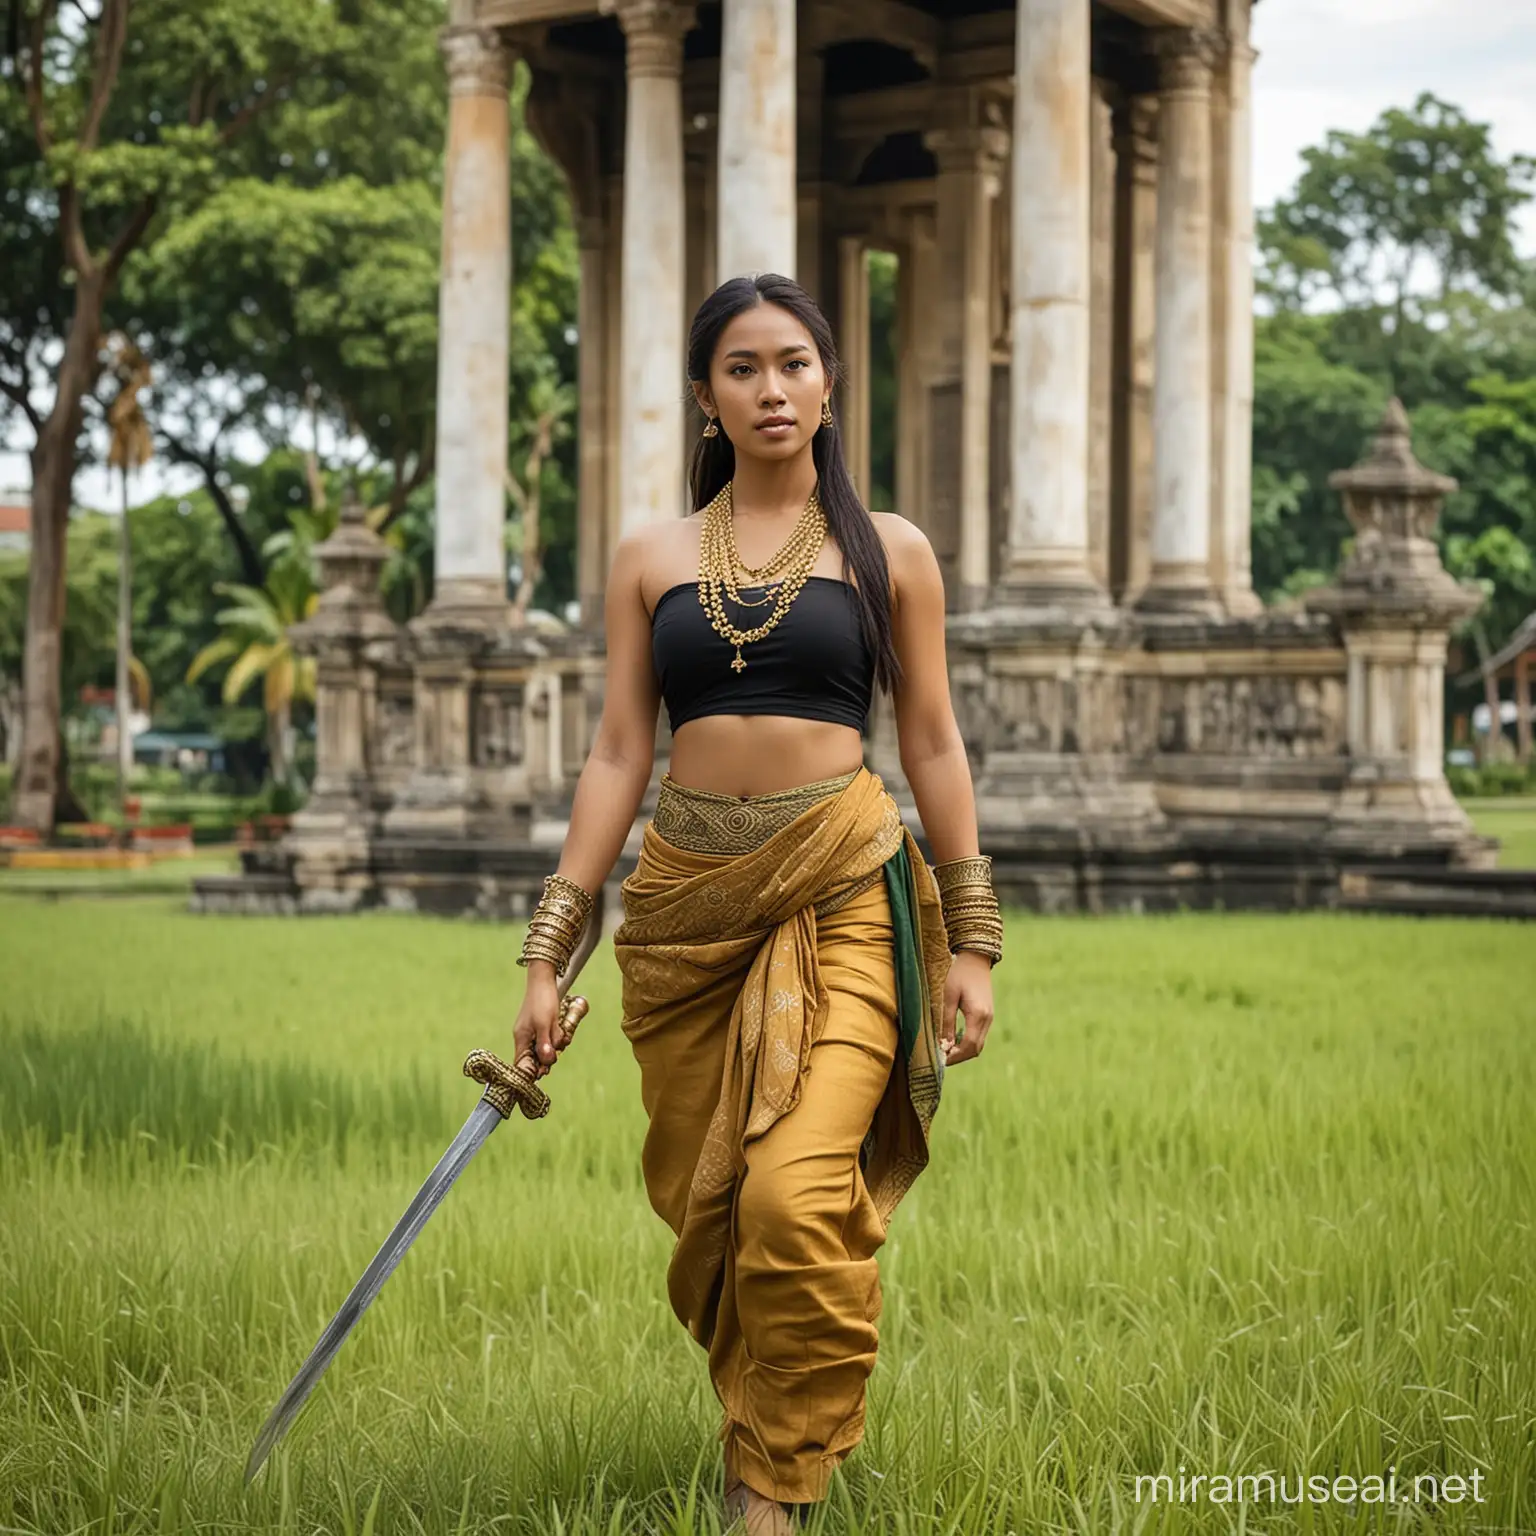 Majapahit Era Woman Warrior with Sword in Green Grass Field